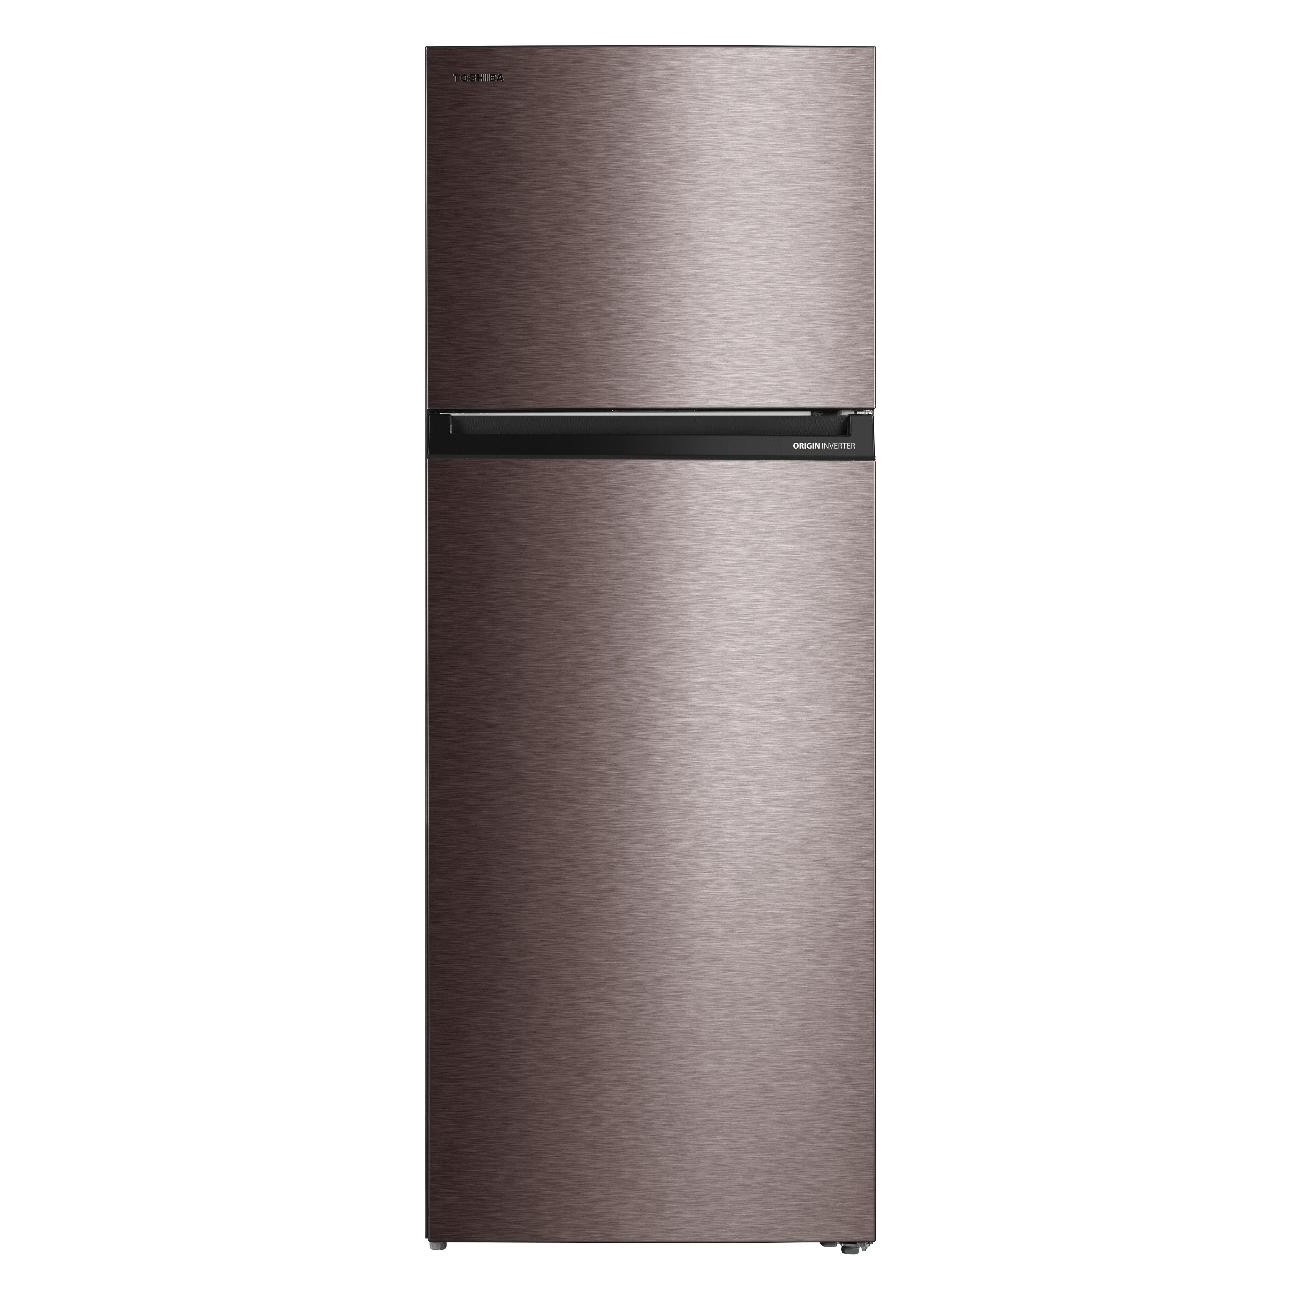 Холодильник Toshiba GR-RT624WE-PMJ(37) коричневый холодильник toshiba gr rt624we pmj 37 коричневый